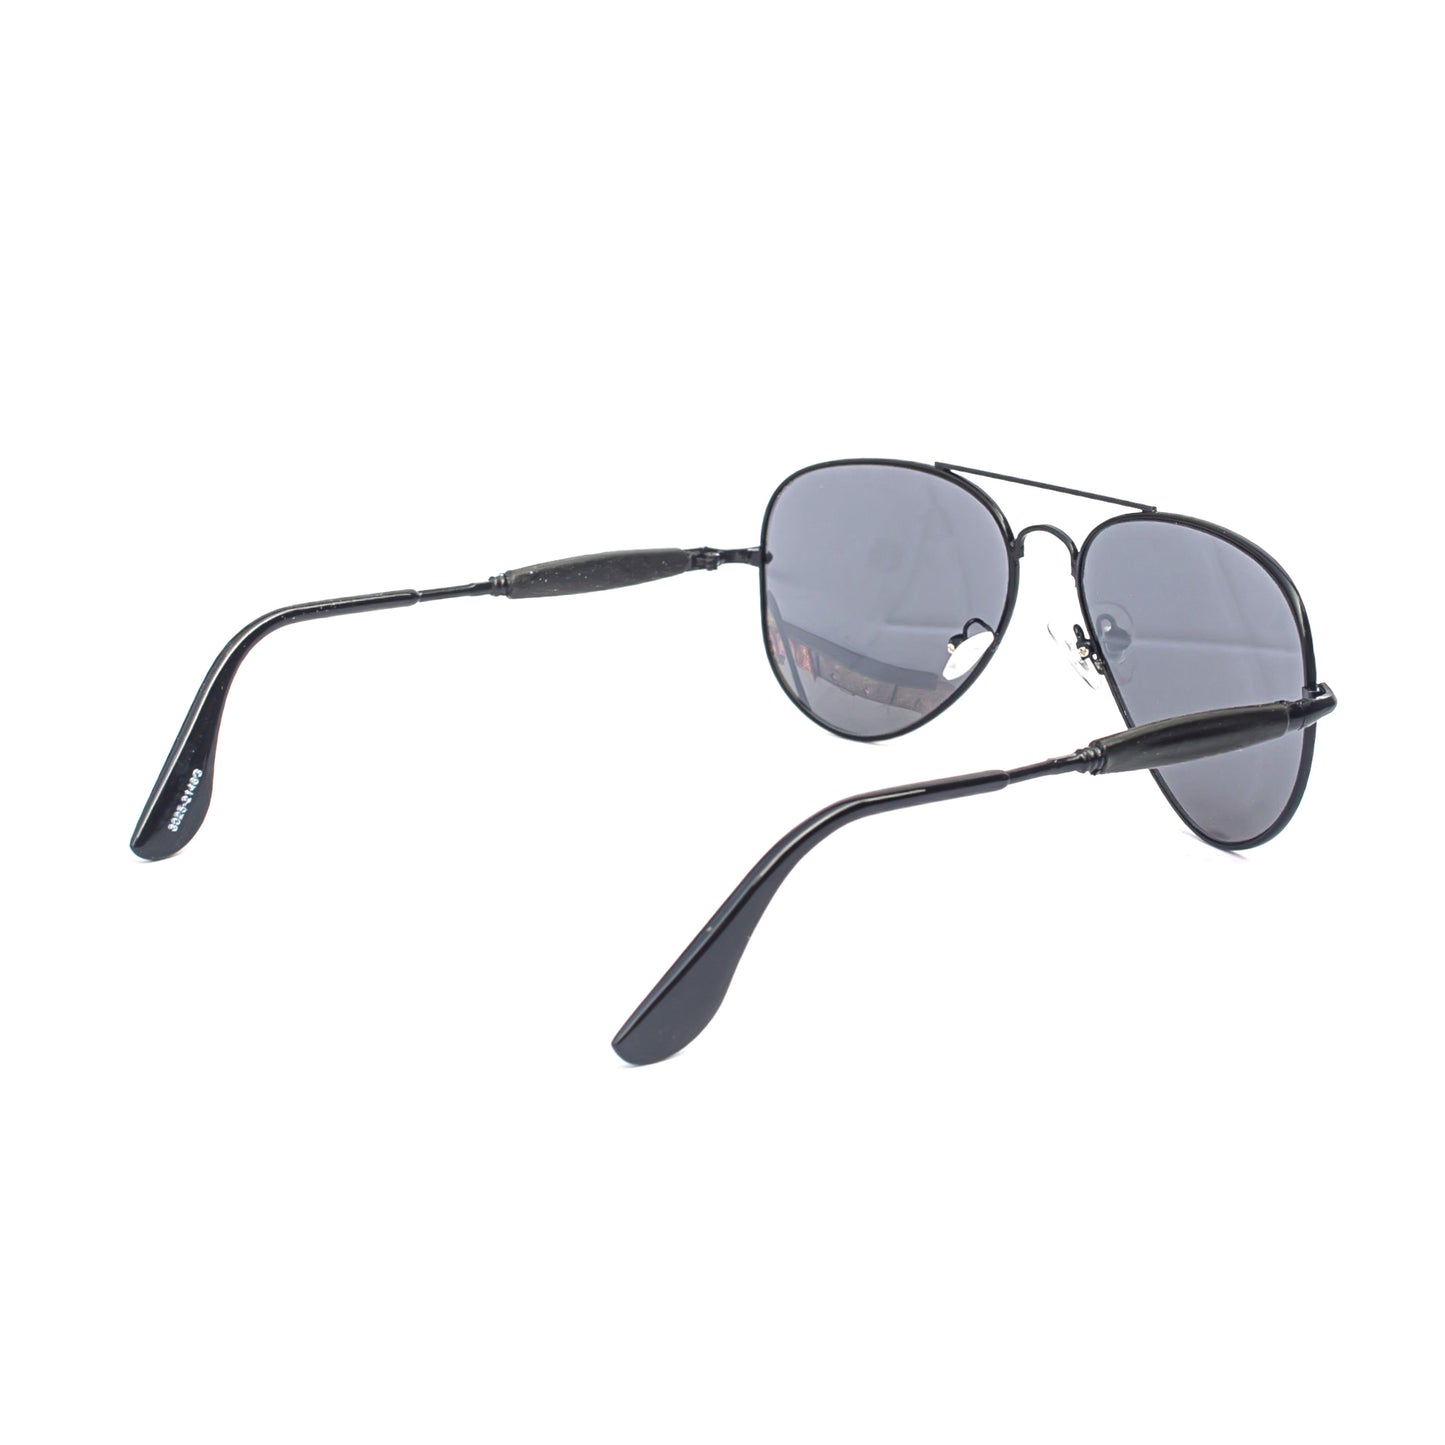 Jiebo Black Aviator Pilot Sunglasses